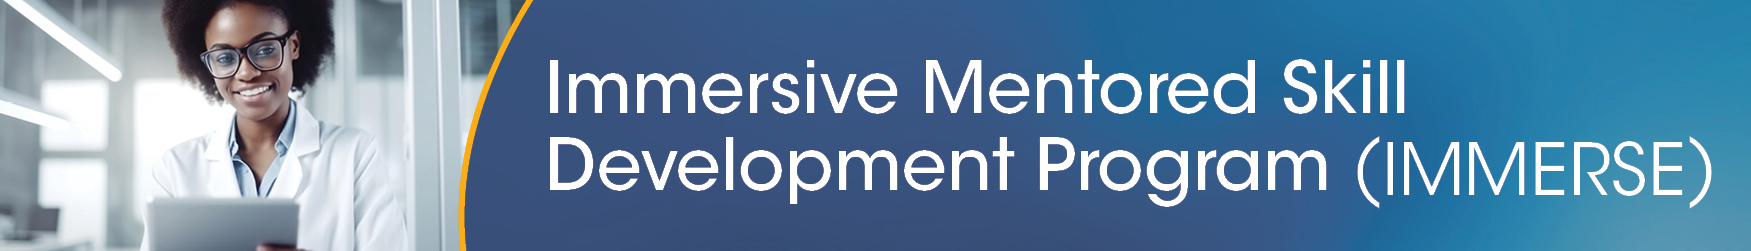 Immersive Mentored Skill Development Program